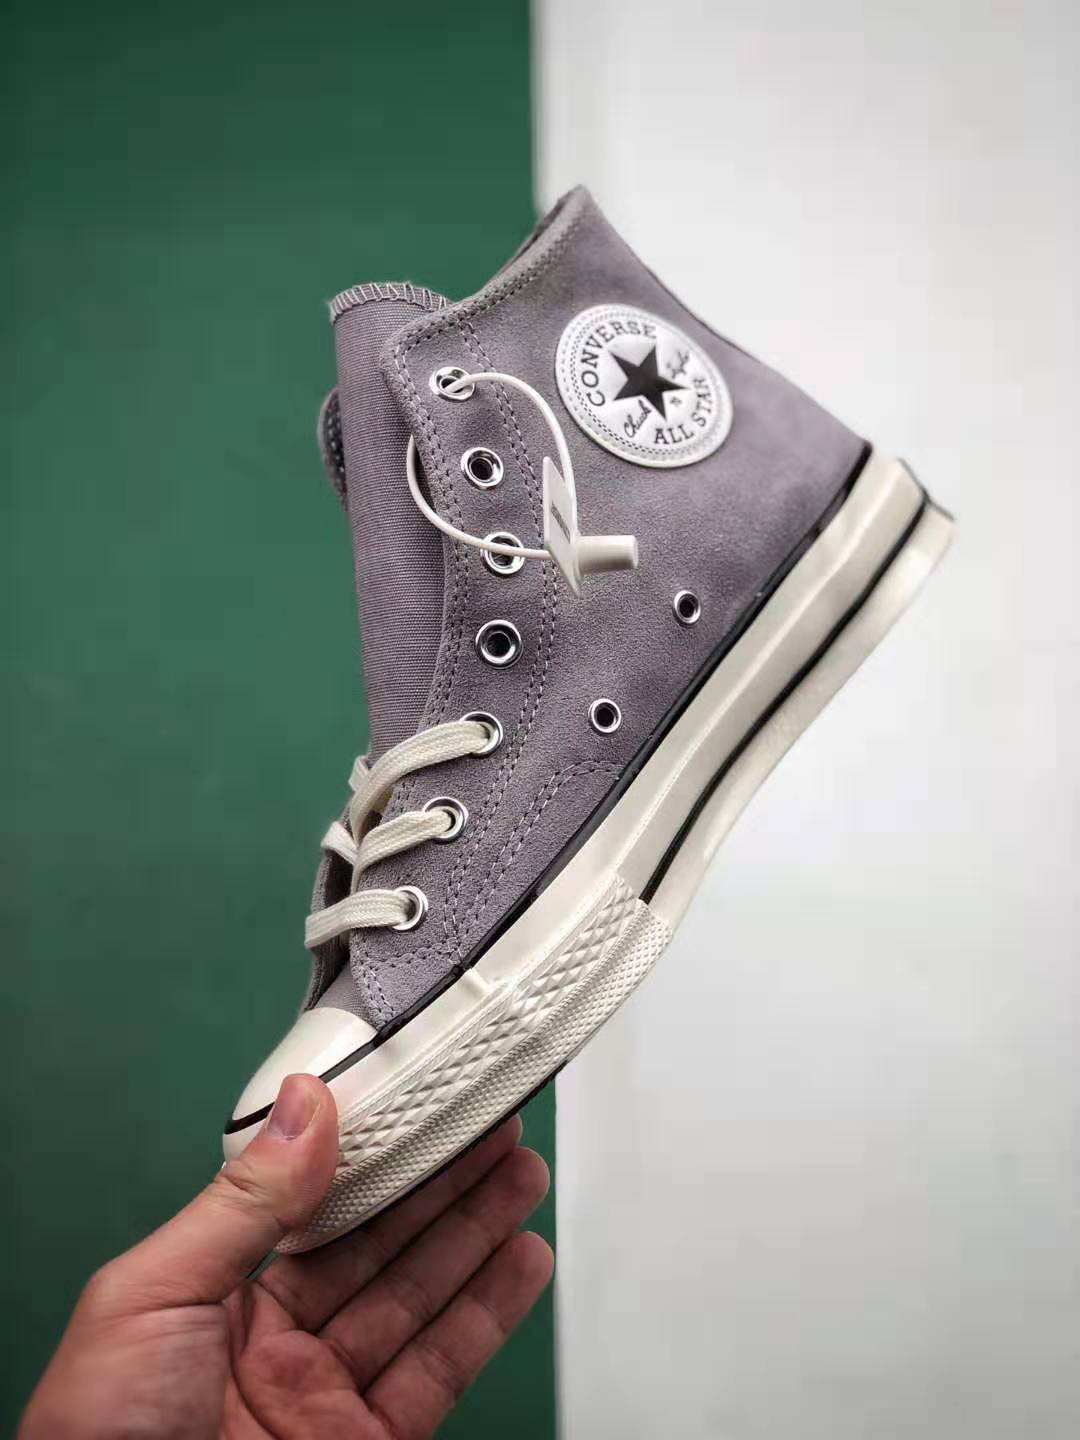 Converse Ctas Hi Moody Purple C19moo 163352C - Stylish and Trendy High-Top Sneakers